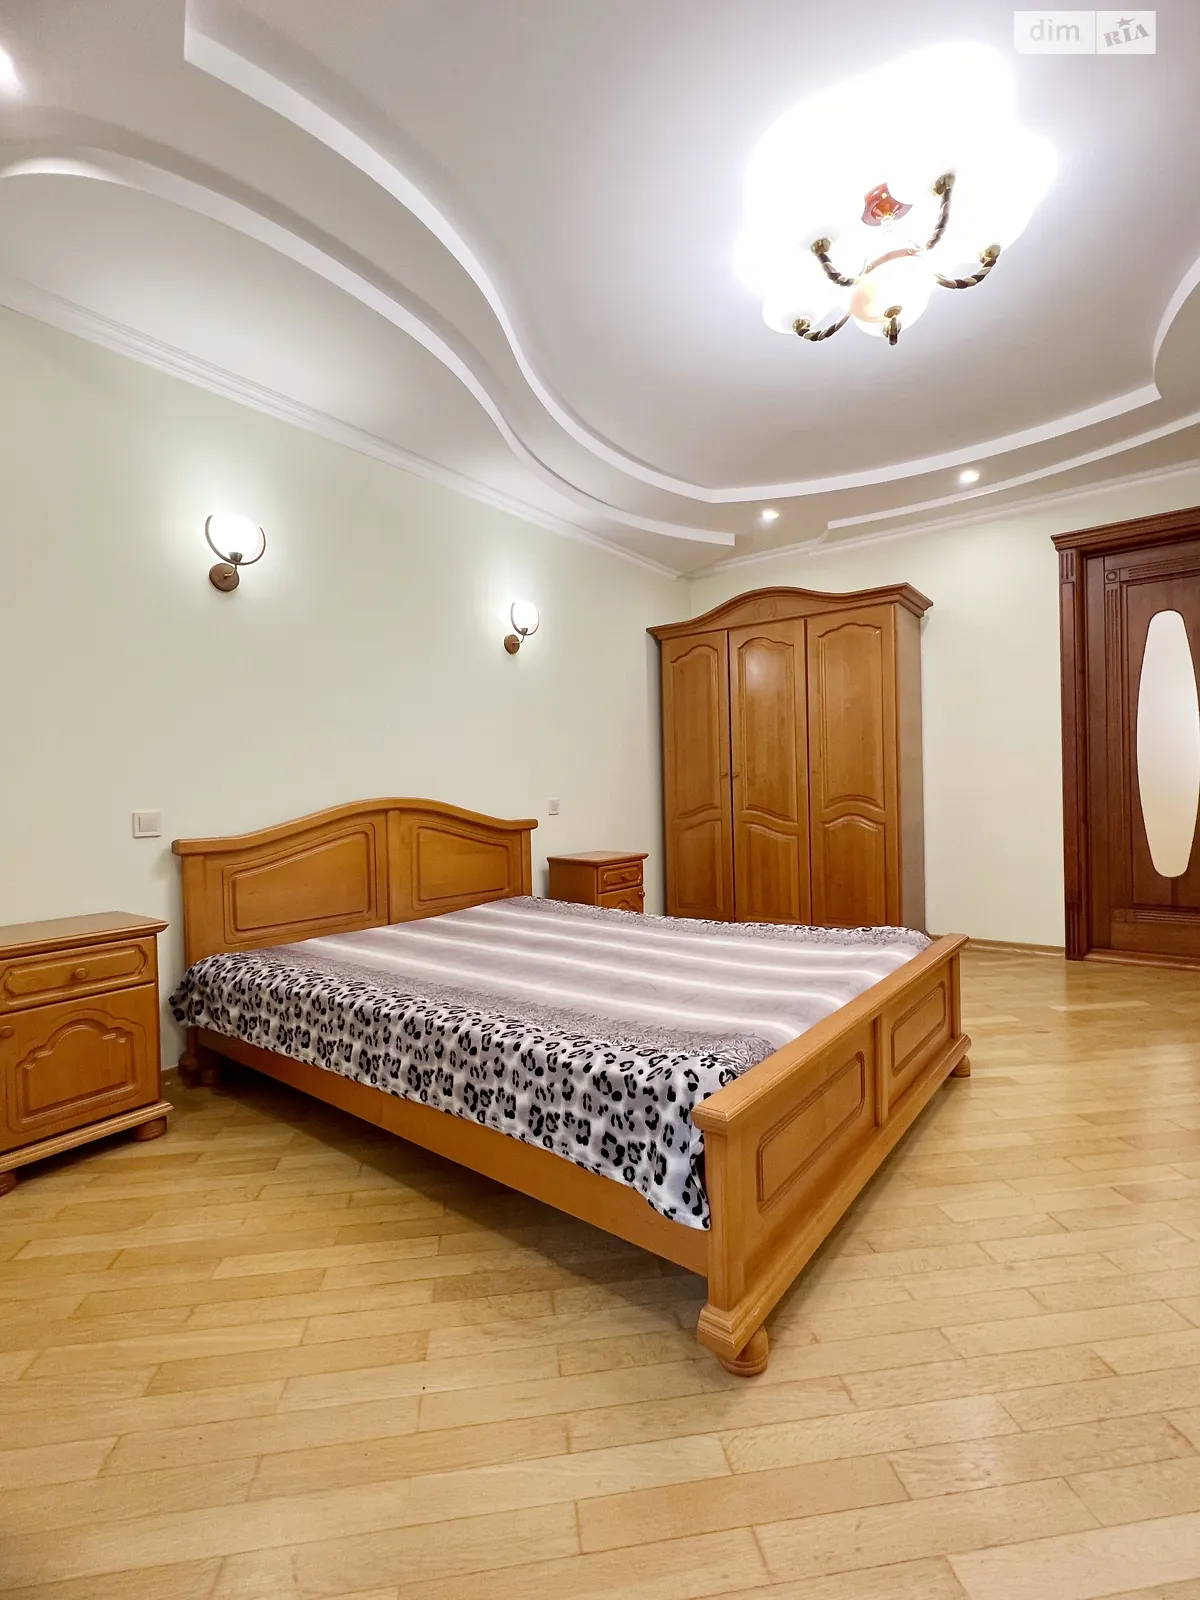 Сдается в аренду 4-комнатная квартира 102 кв. м в Ровно - фото 3